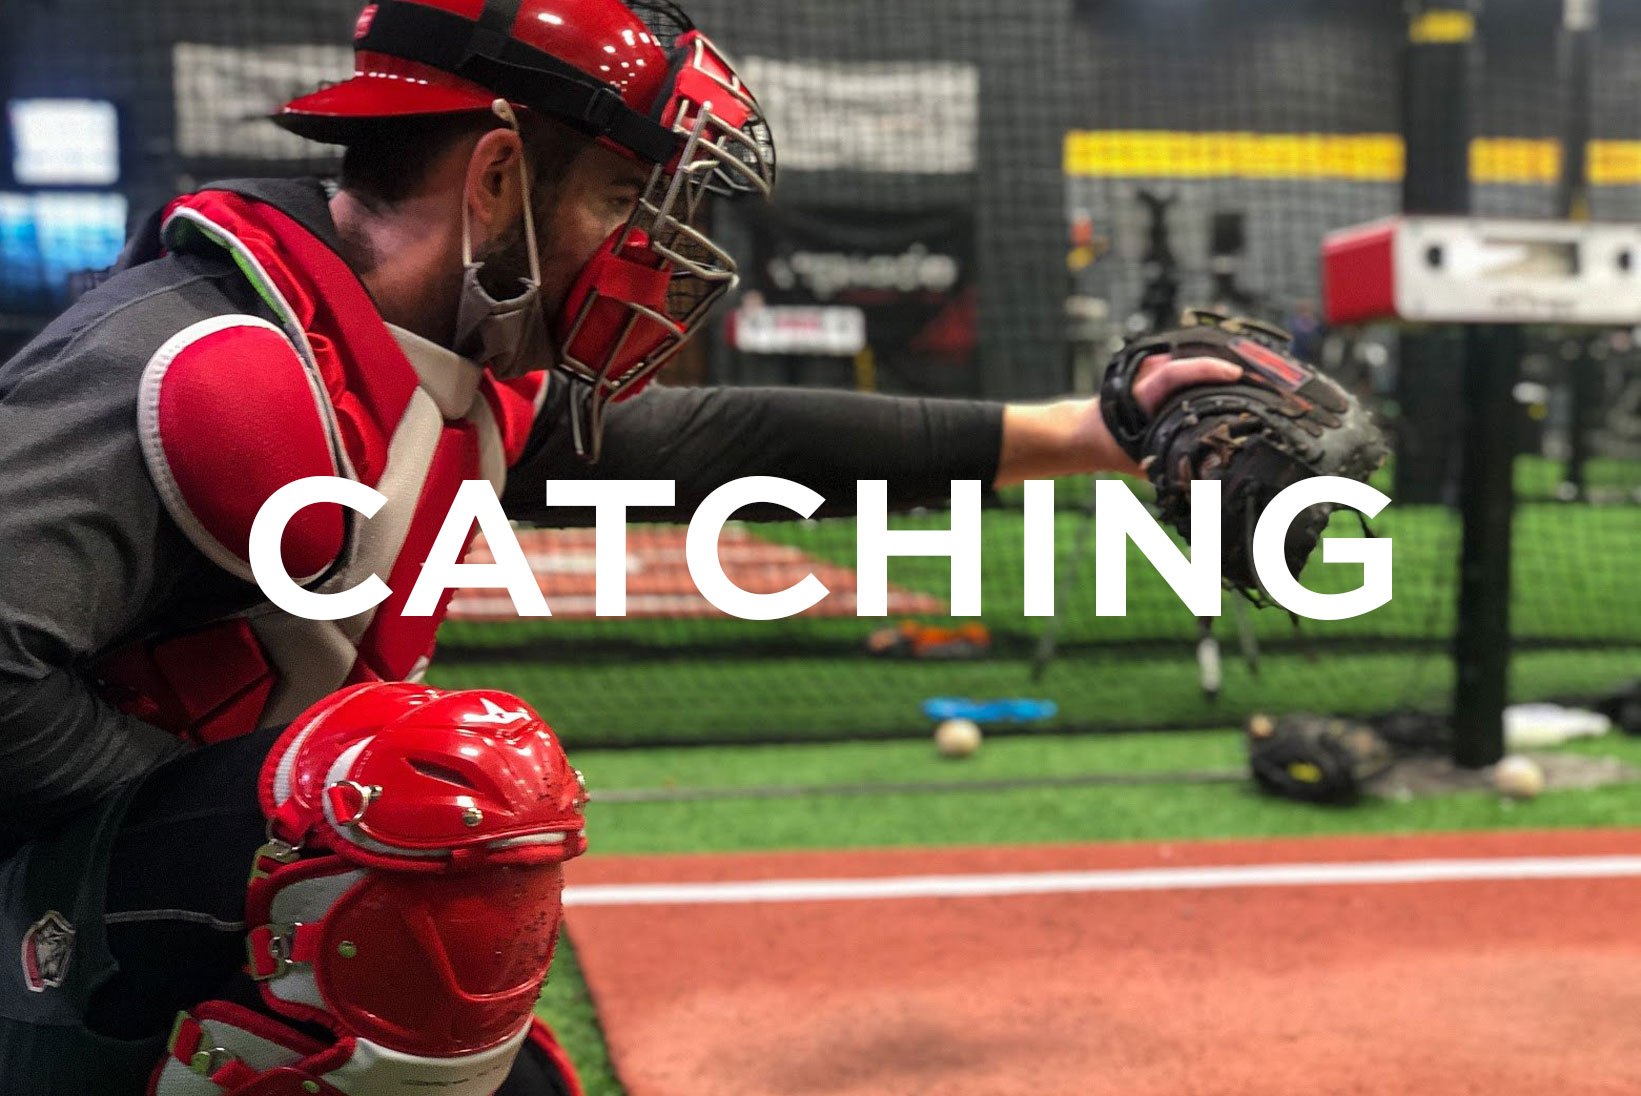 Catching Drills for Development: Three Areas to Improve - Driveline Baseball